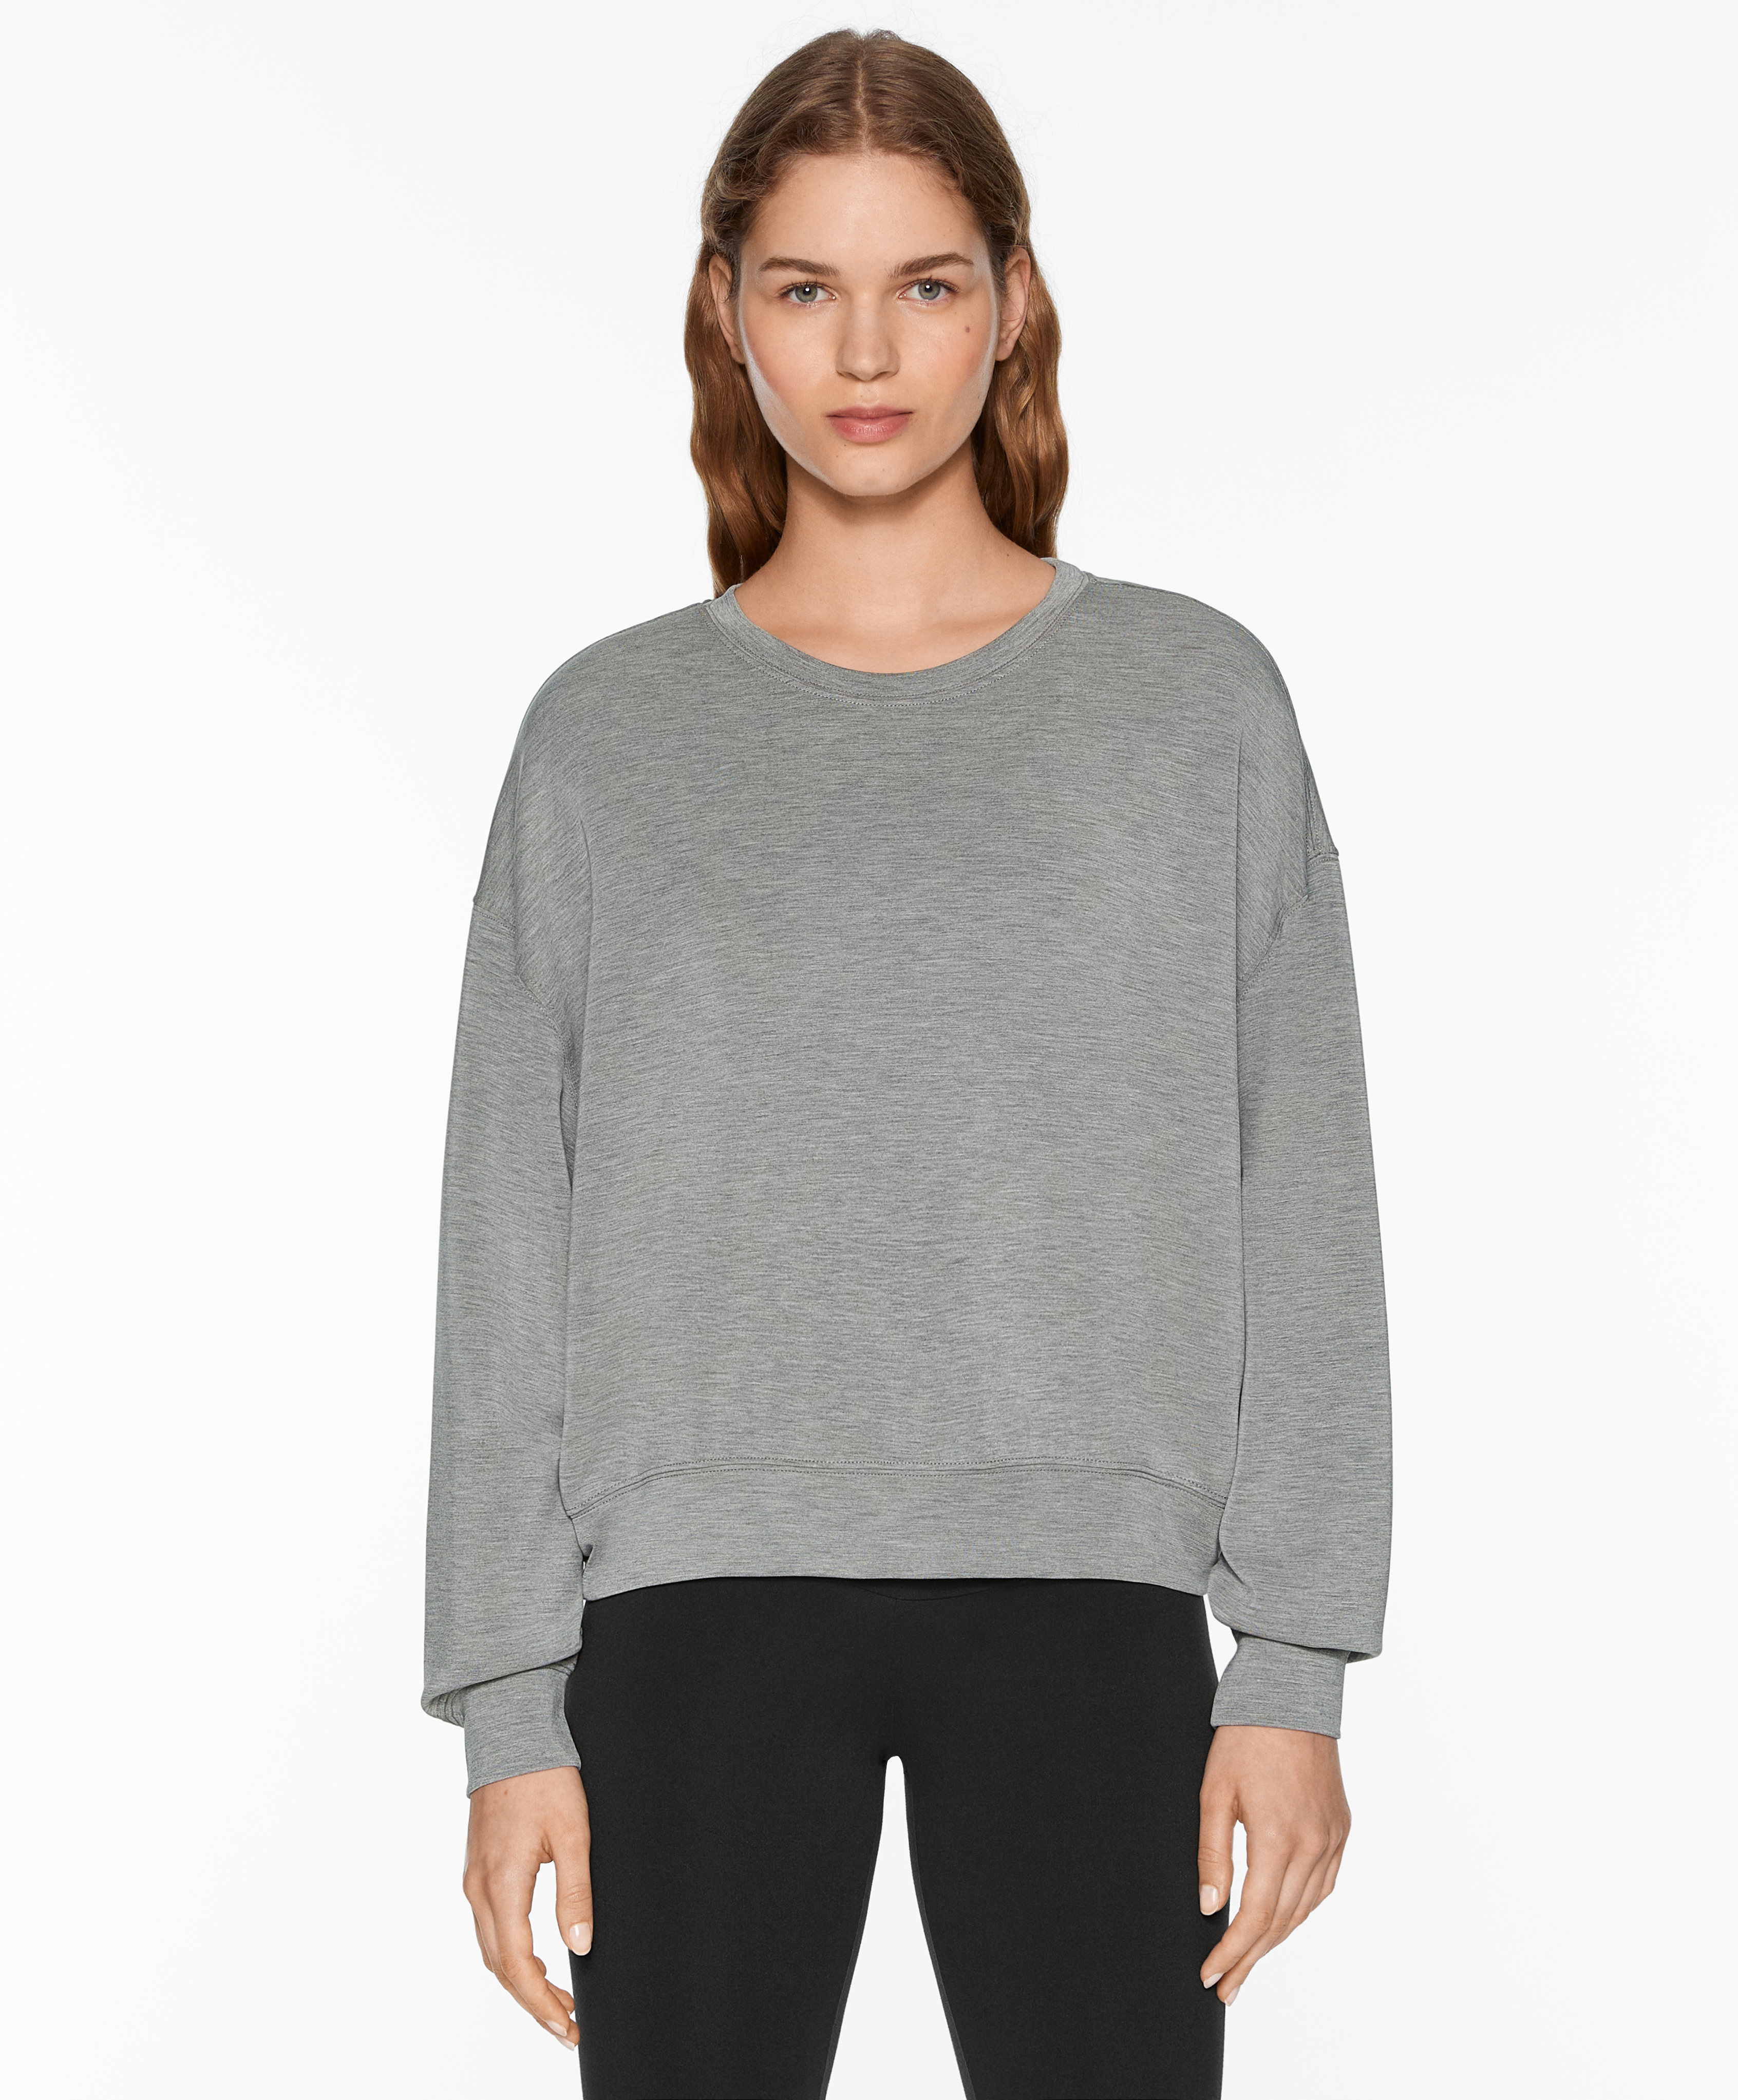 Crop sweatshirt with modal